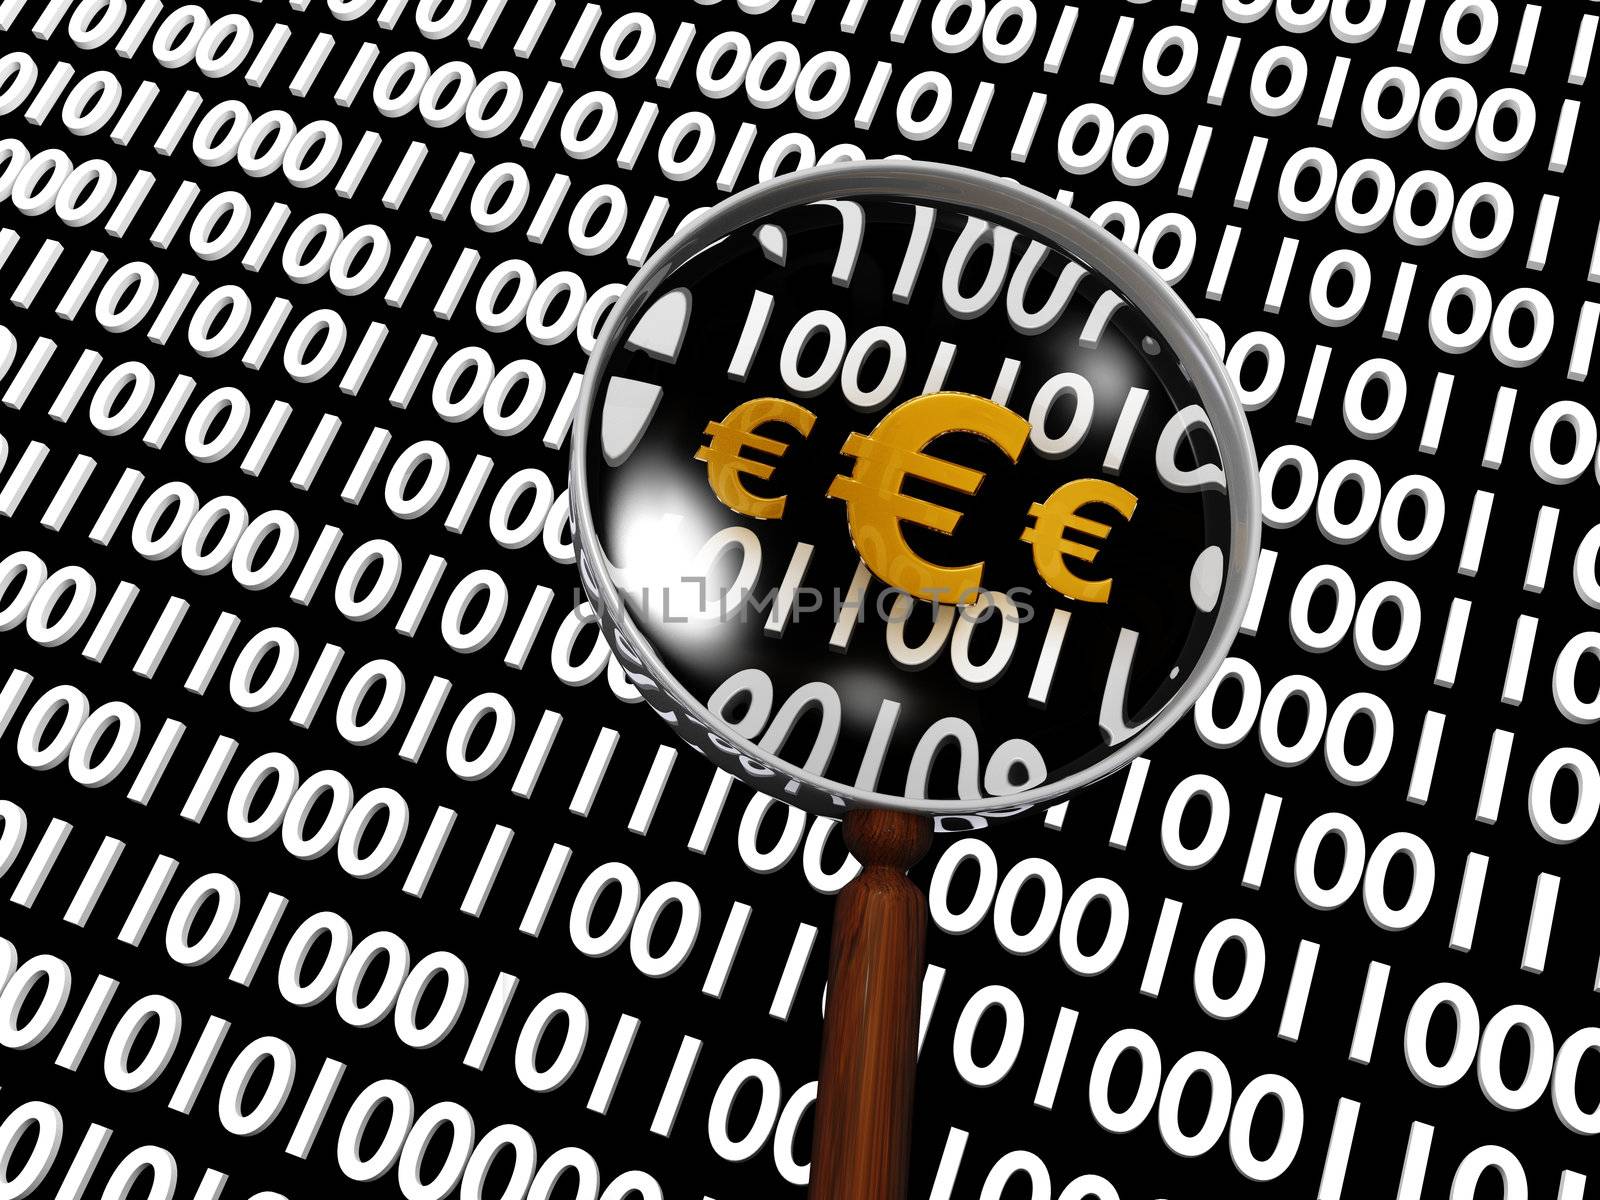 Hidden Numeric Euro in many digital binary numbers